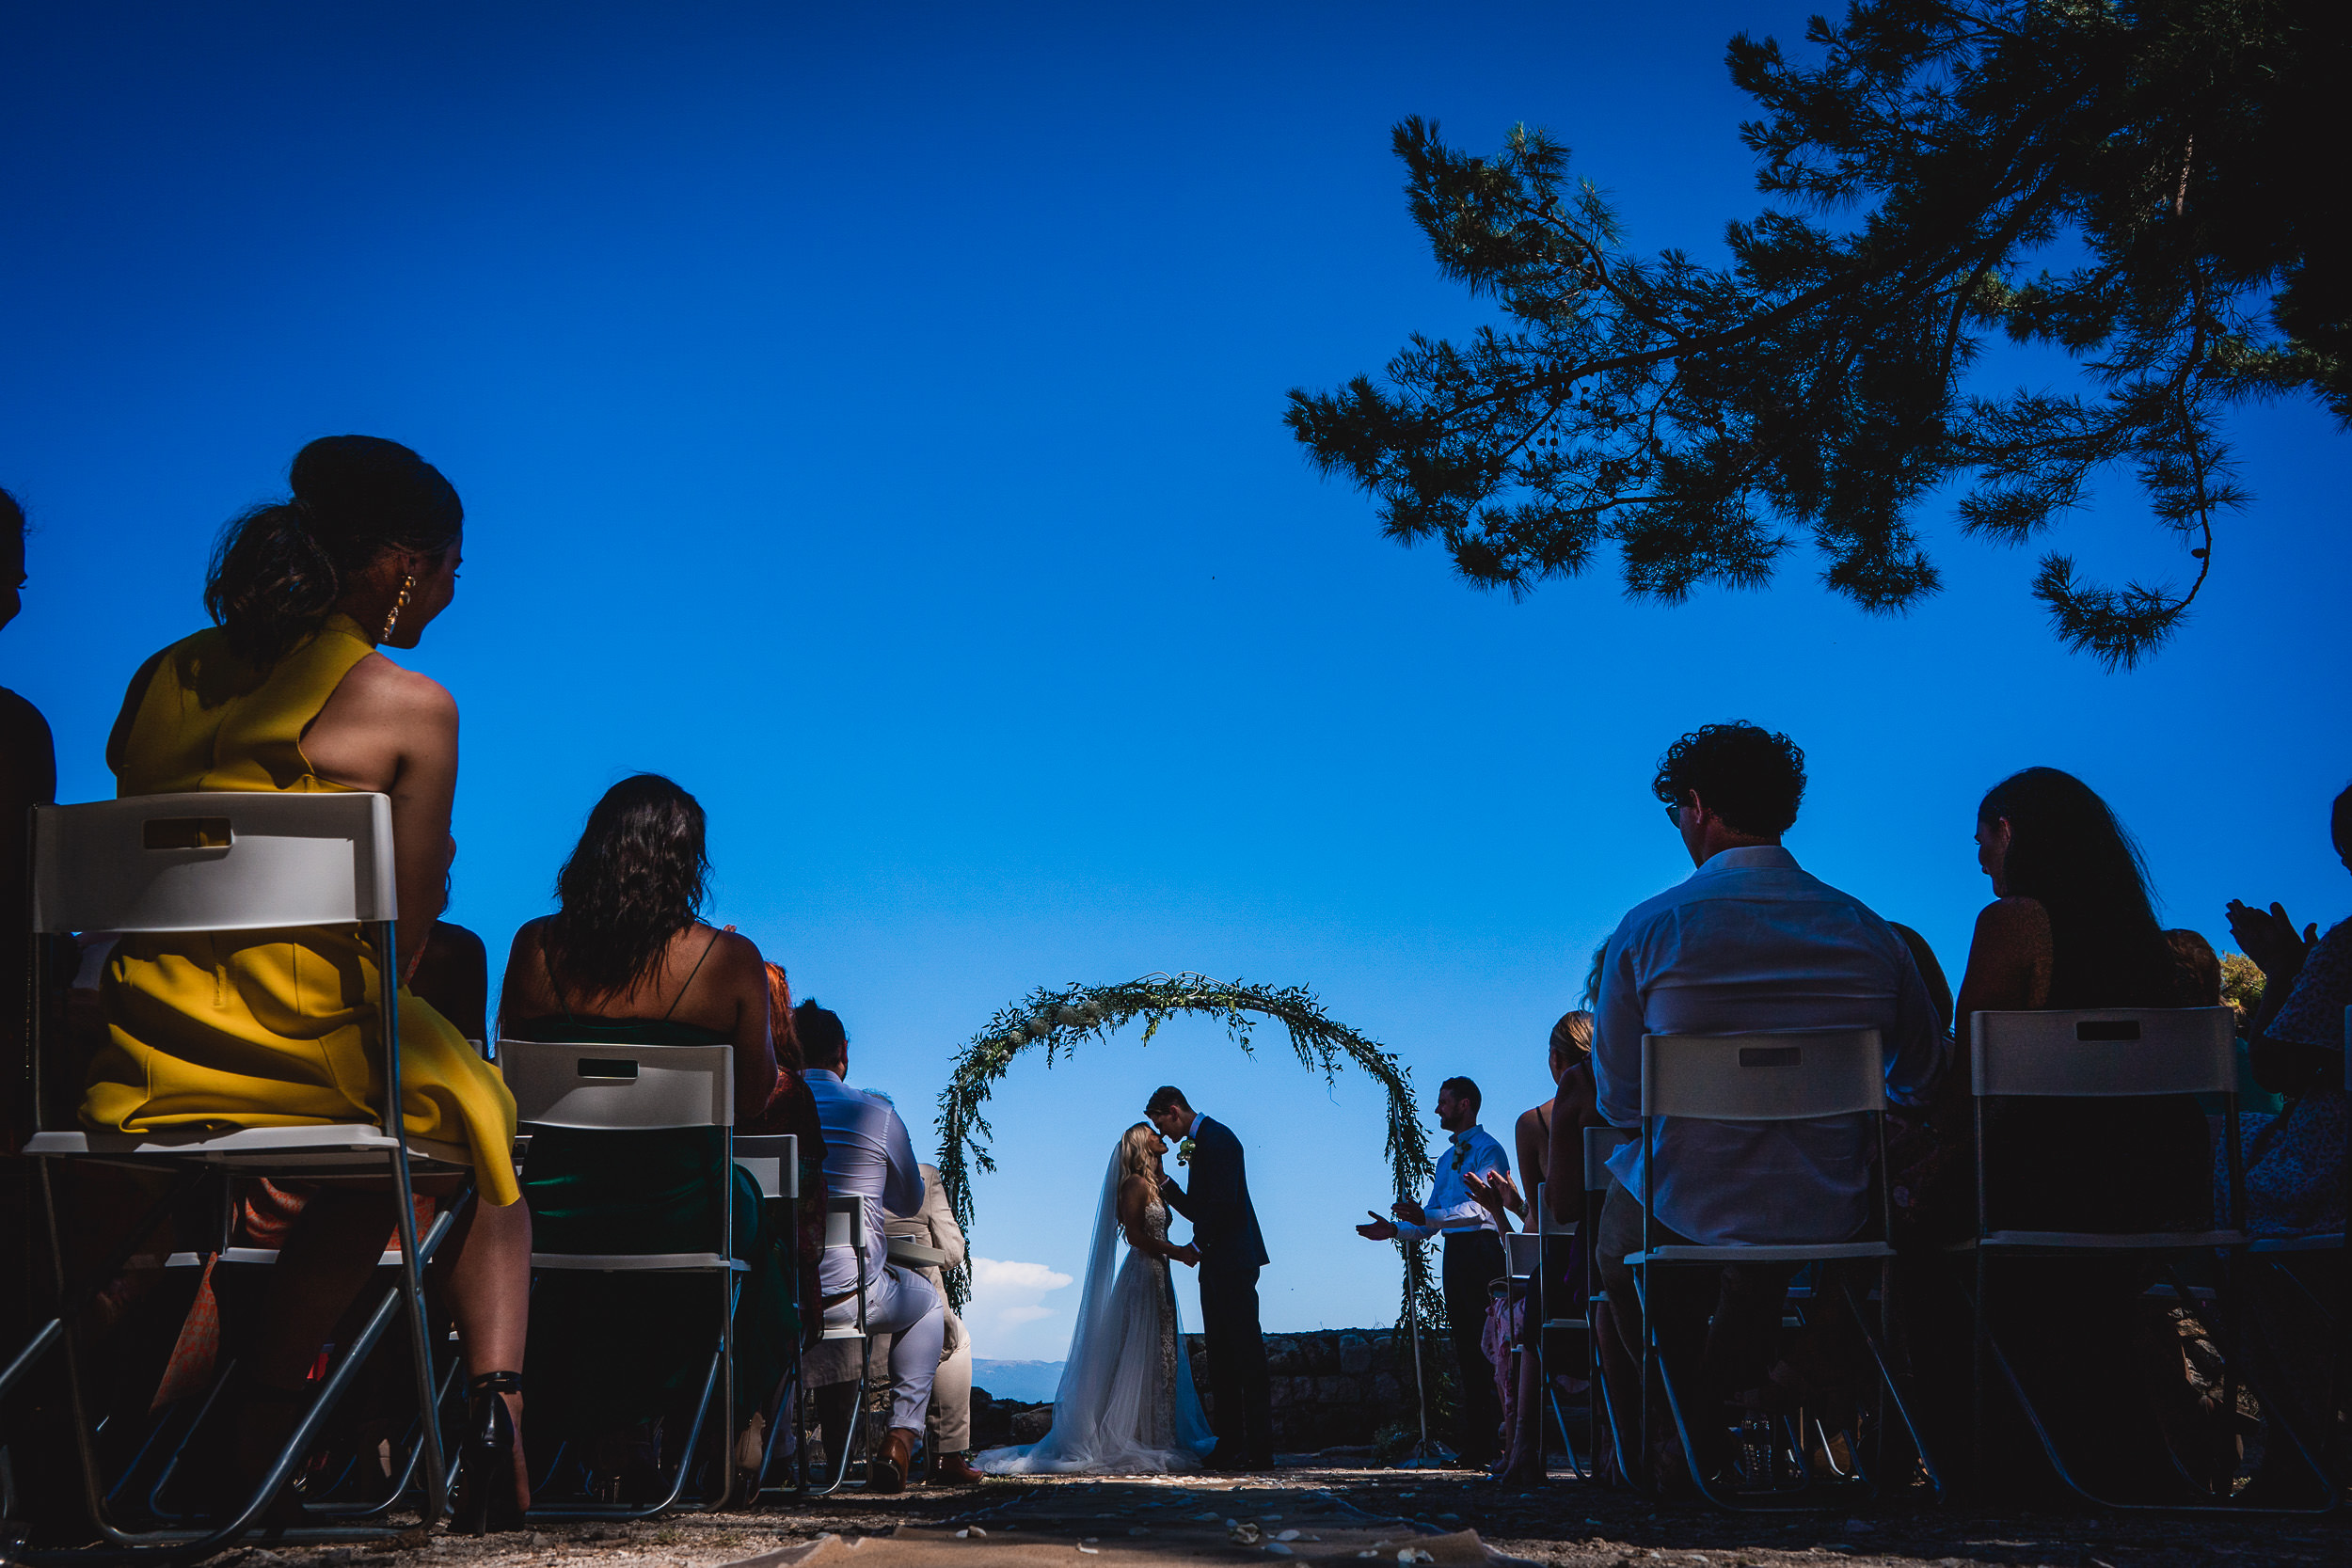 A groom and bride posing for their wedding photographer under a blue sky.